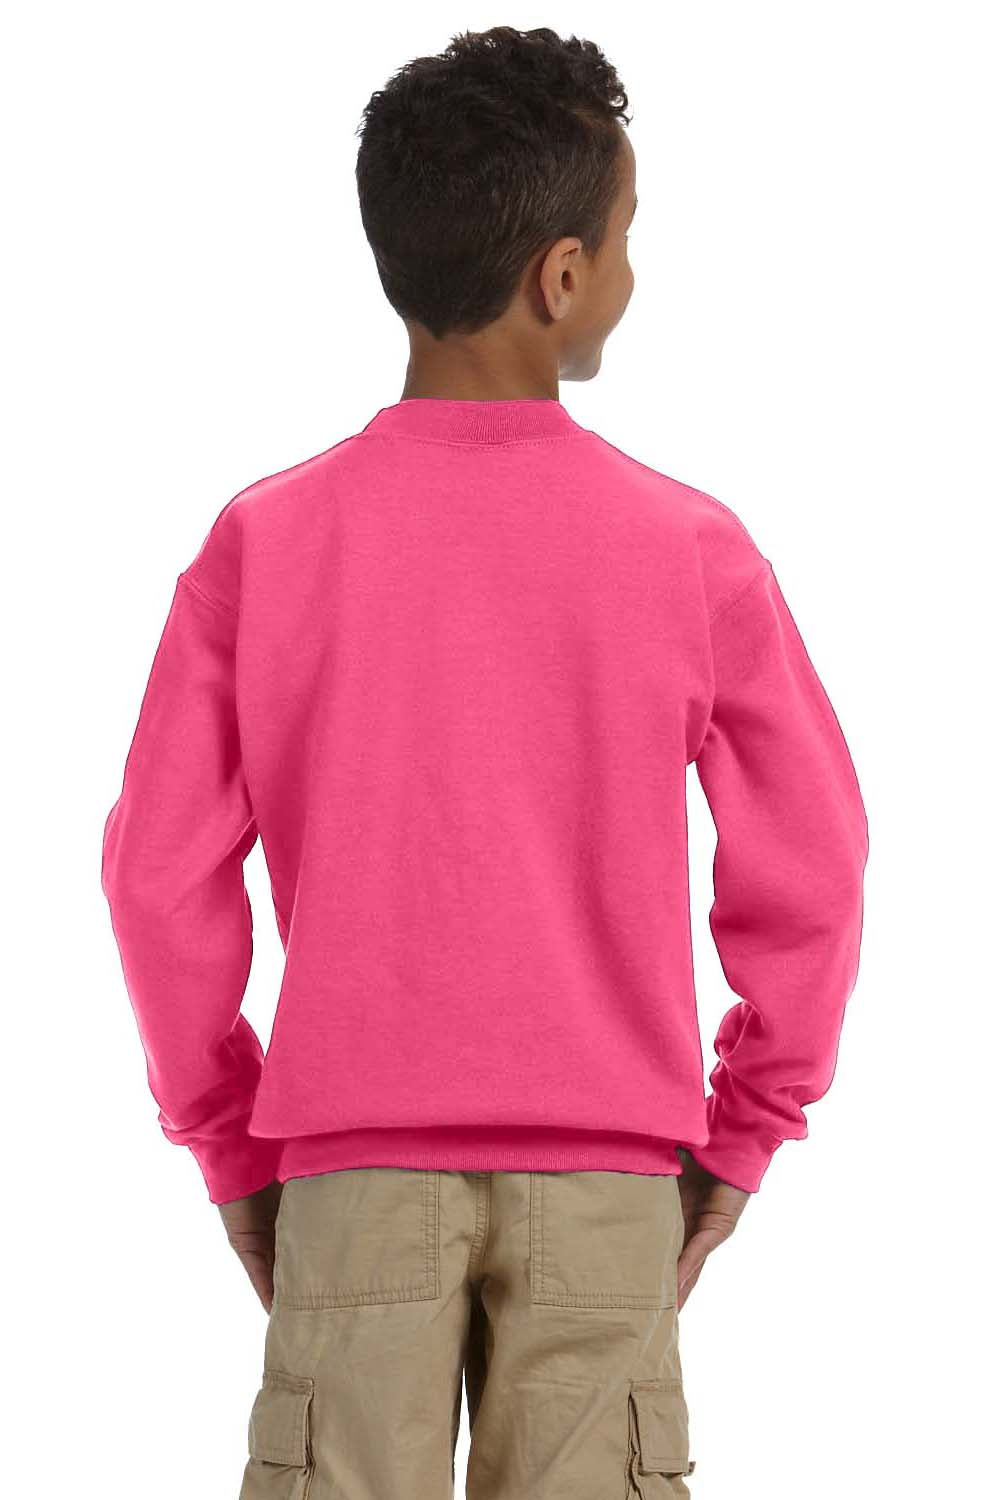 Gildan G180B Youth Fleece Crewneck Sweatshirt Safety Pink Back